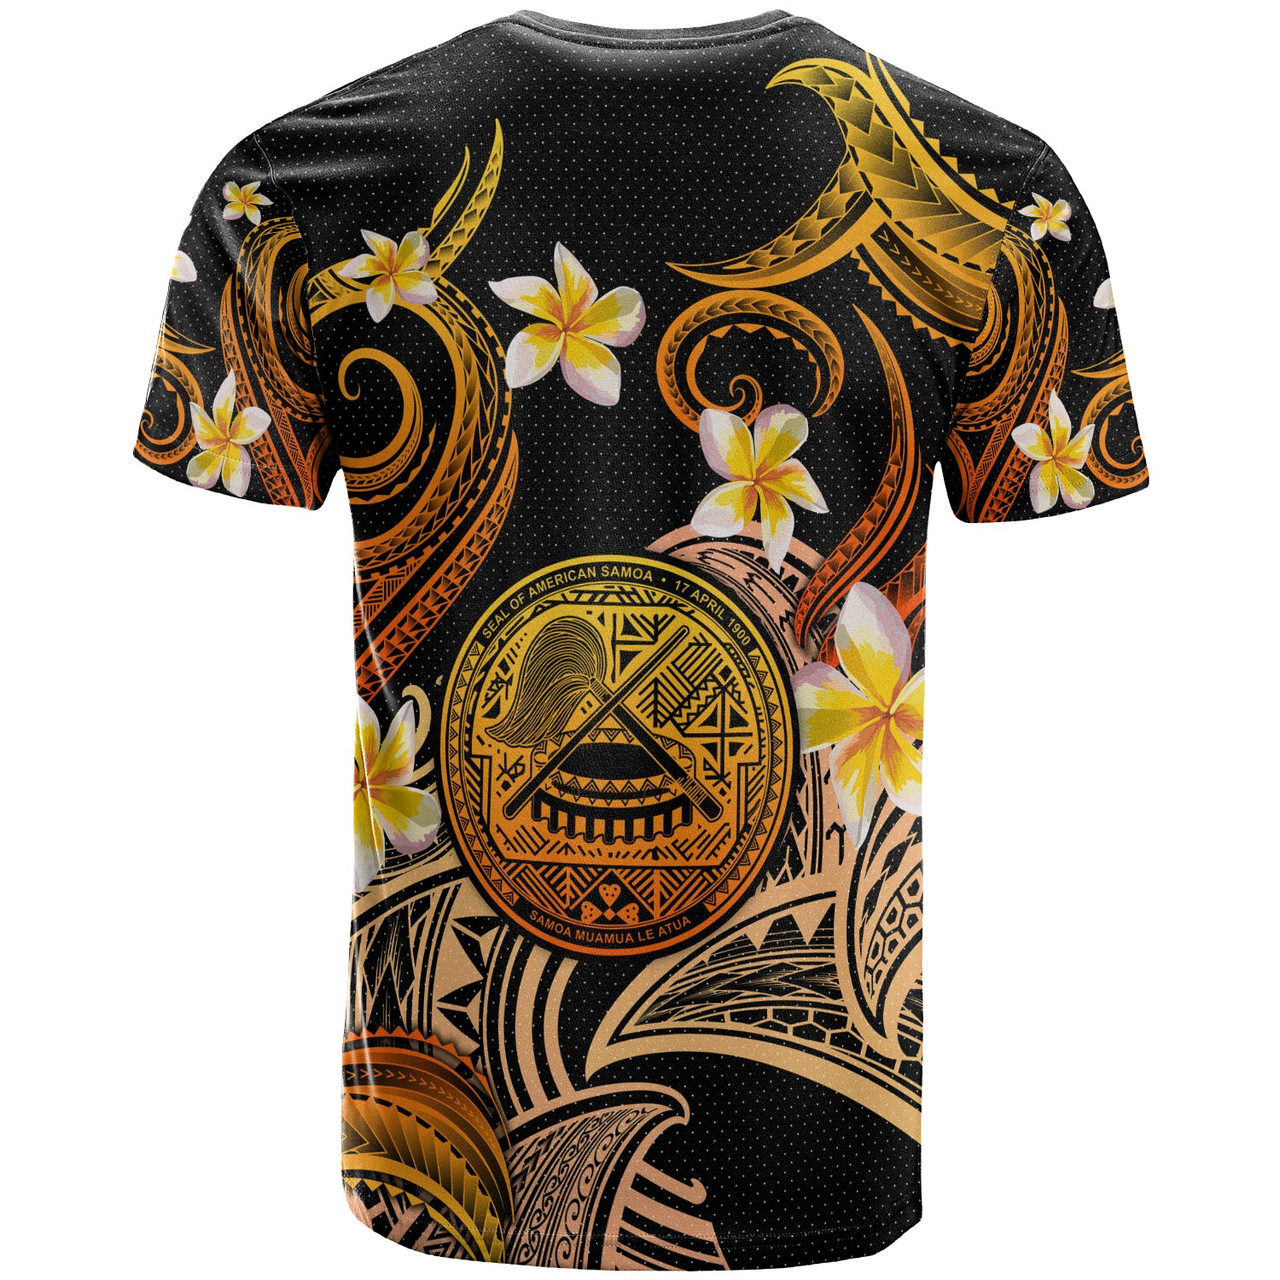 American Samoa T-shirt - Custom Personalised Polynesian Waves with Plumeria Flowers (Orange)